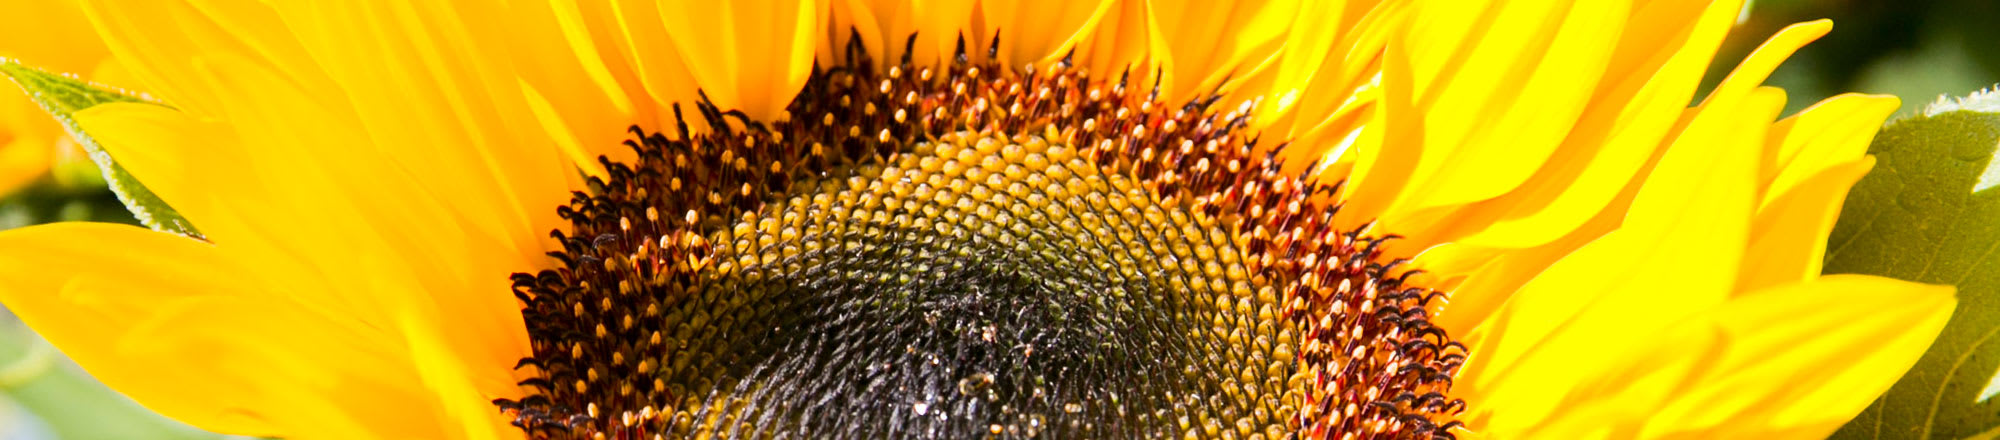 Sunflowers - divine and beautiful